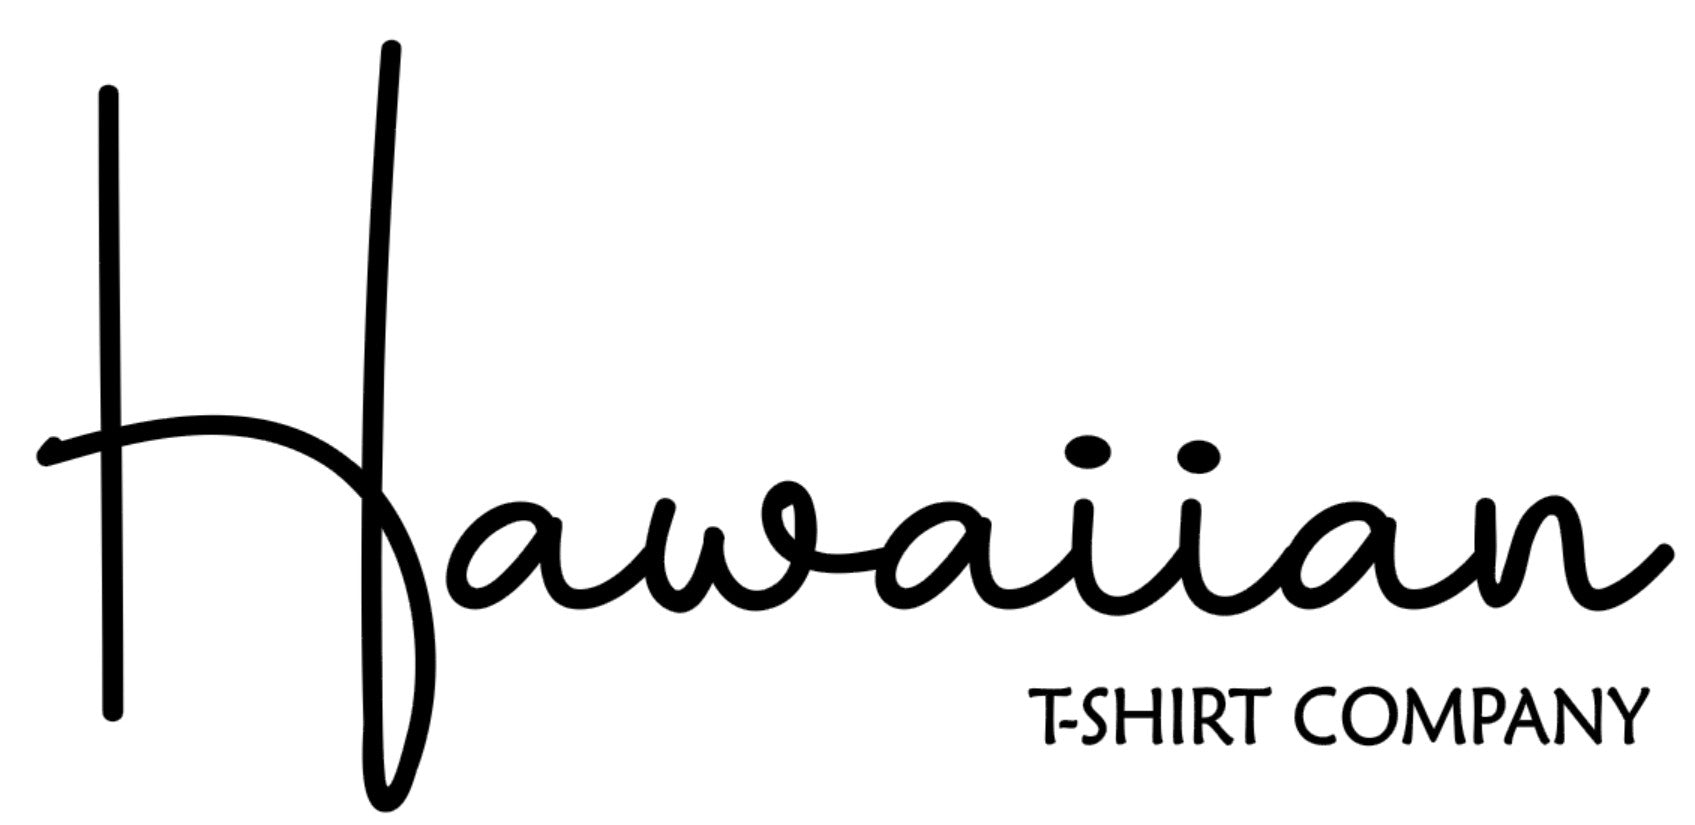 The Hawaiian Tshirt Company